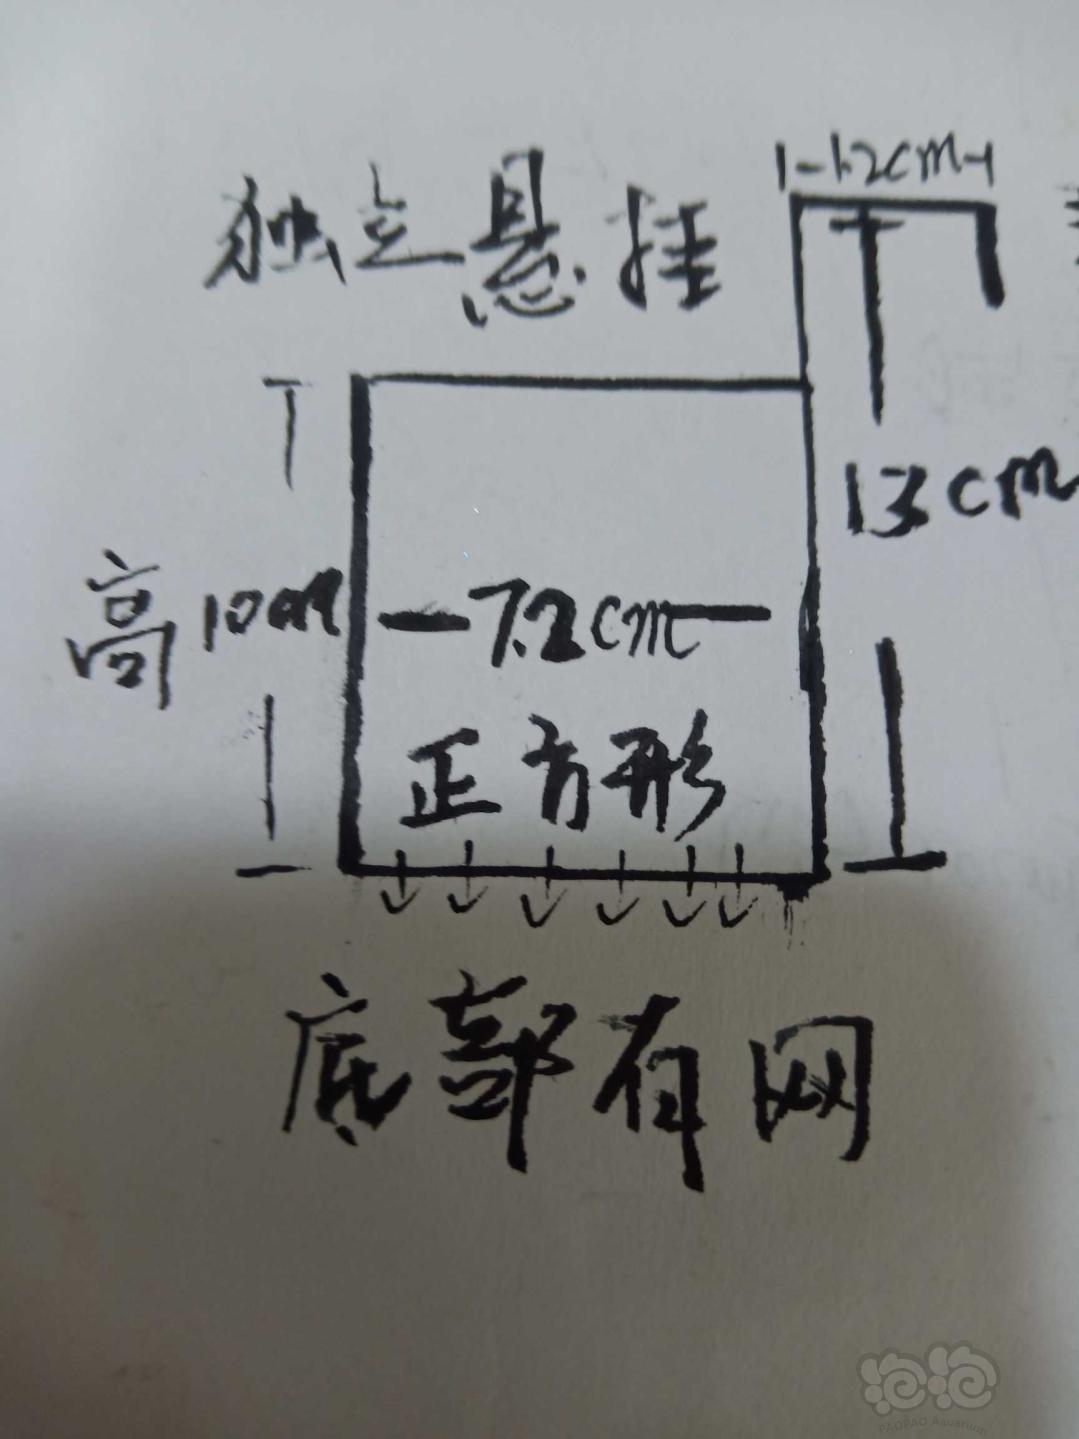 2019－10－29#RMB拍卖独立悬挂隔离盒2个-图1